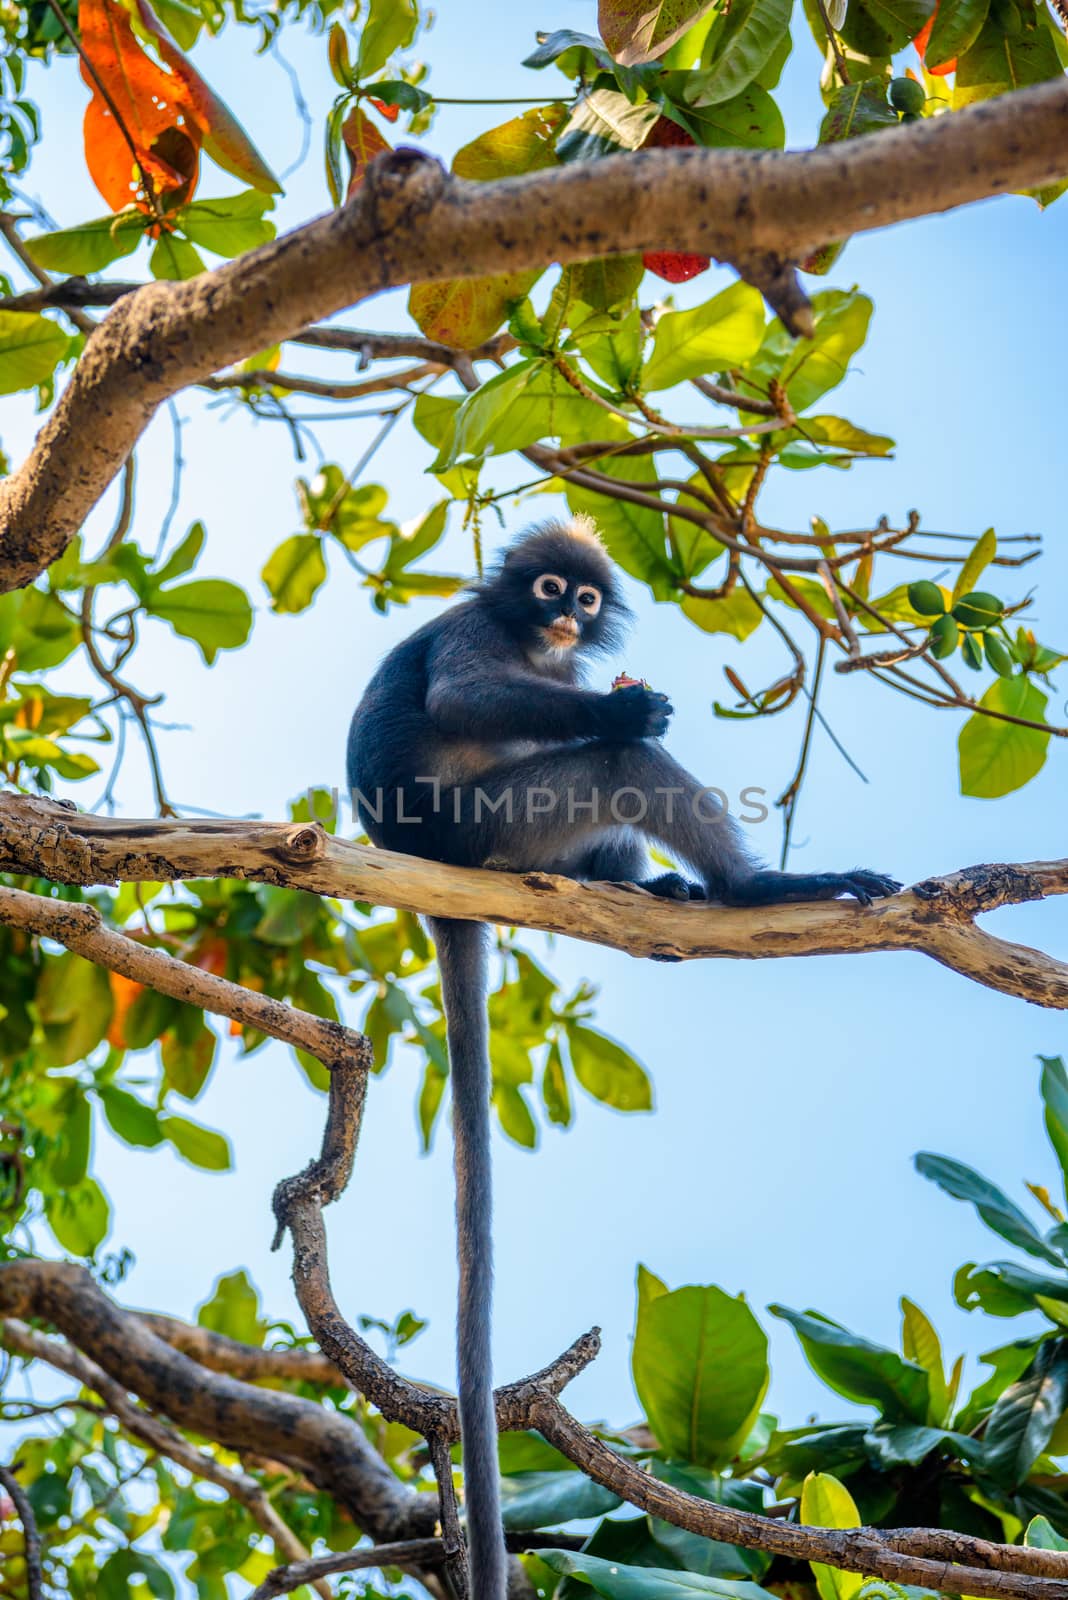 Koh Phaluai, Mu Ko Ang Thong National Park, Gulf of Thailand, Siam, Little leaf monkey or Dusky Langur eating fruits in the rain forest